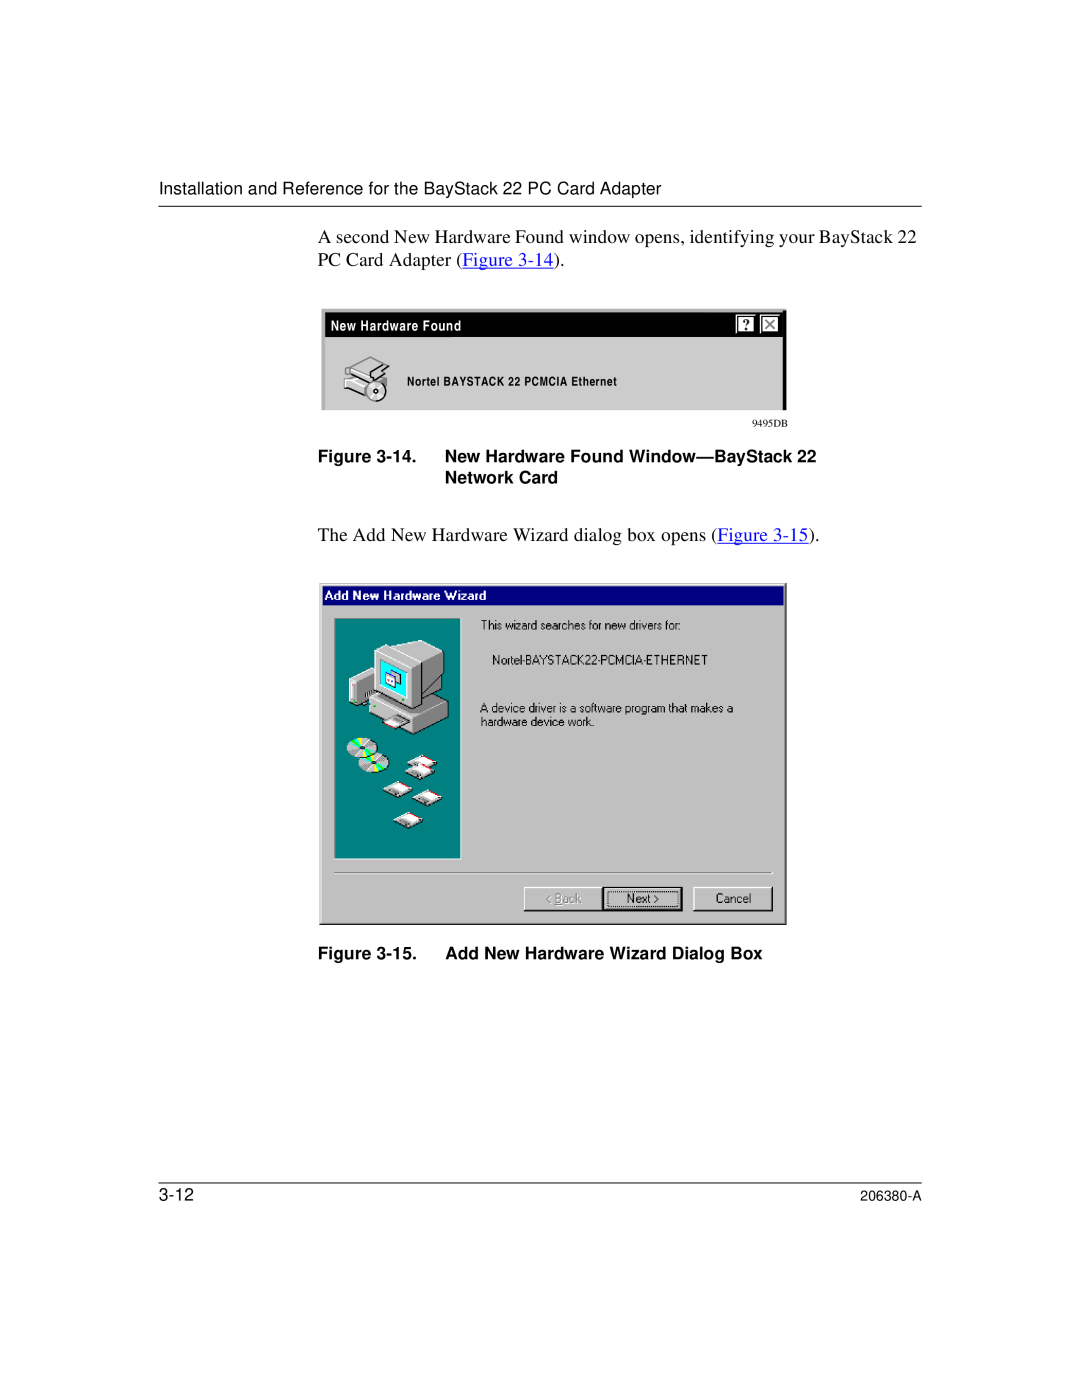 3Com 206380-A manual 15.Add New Hardware Wizard Dialog Box, 3-12 